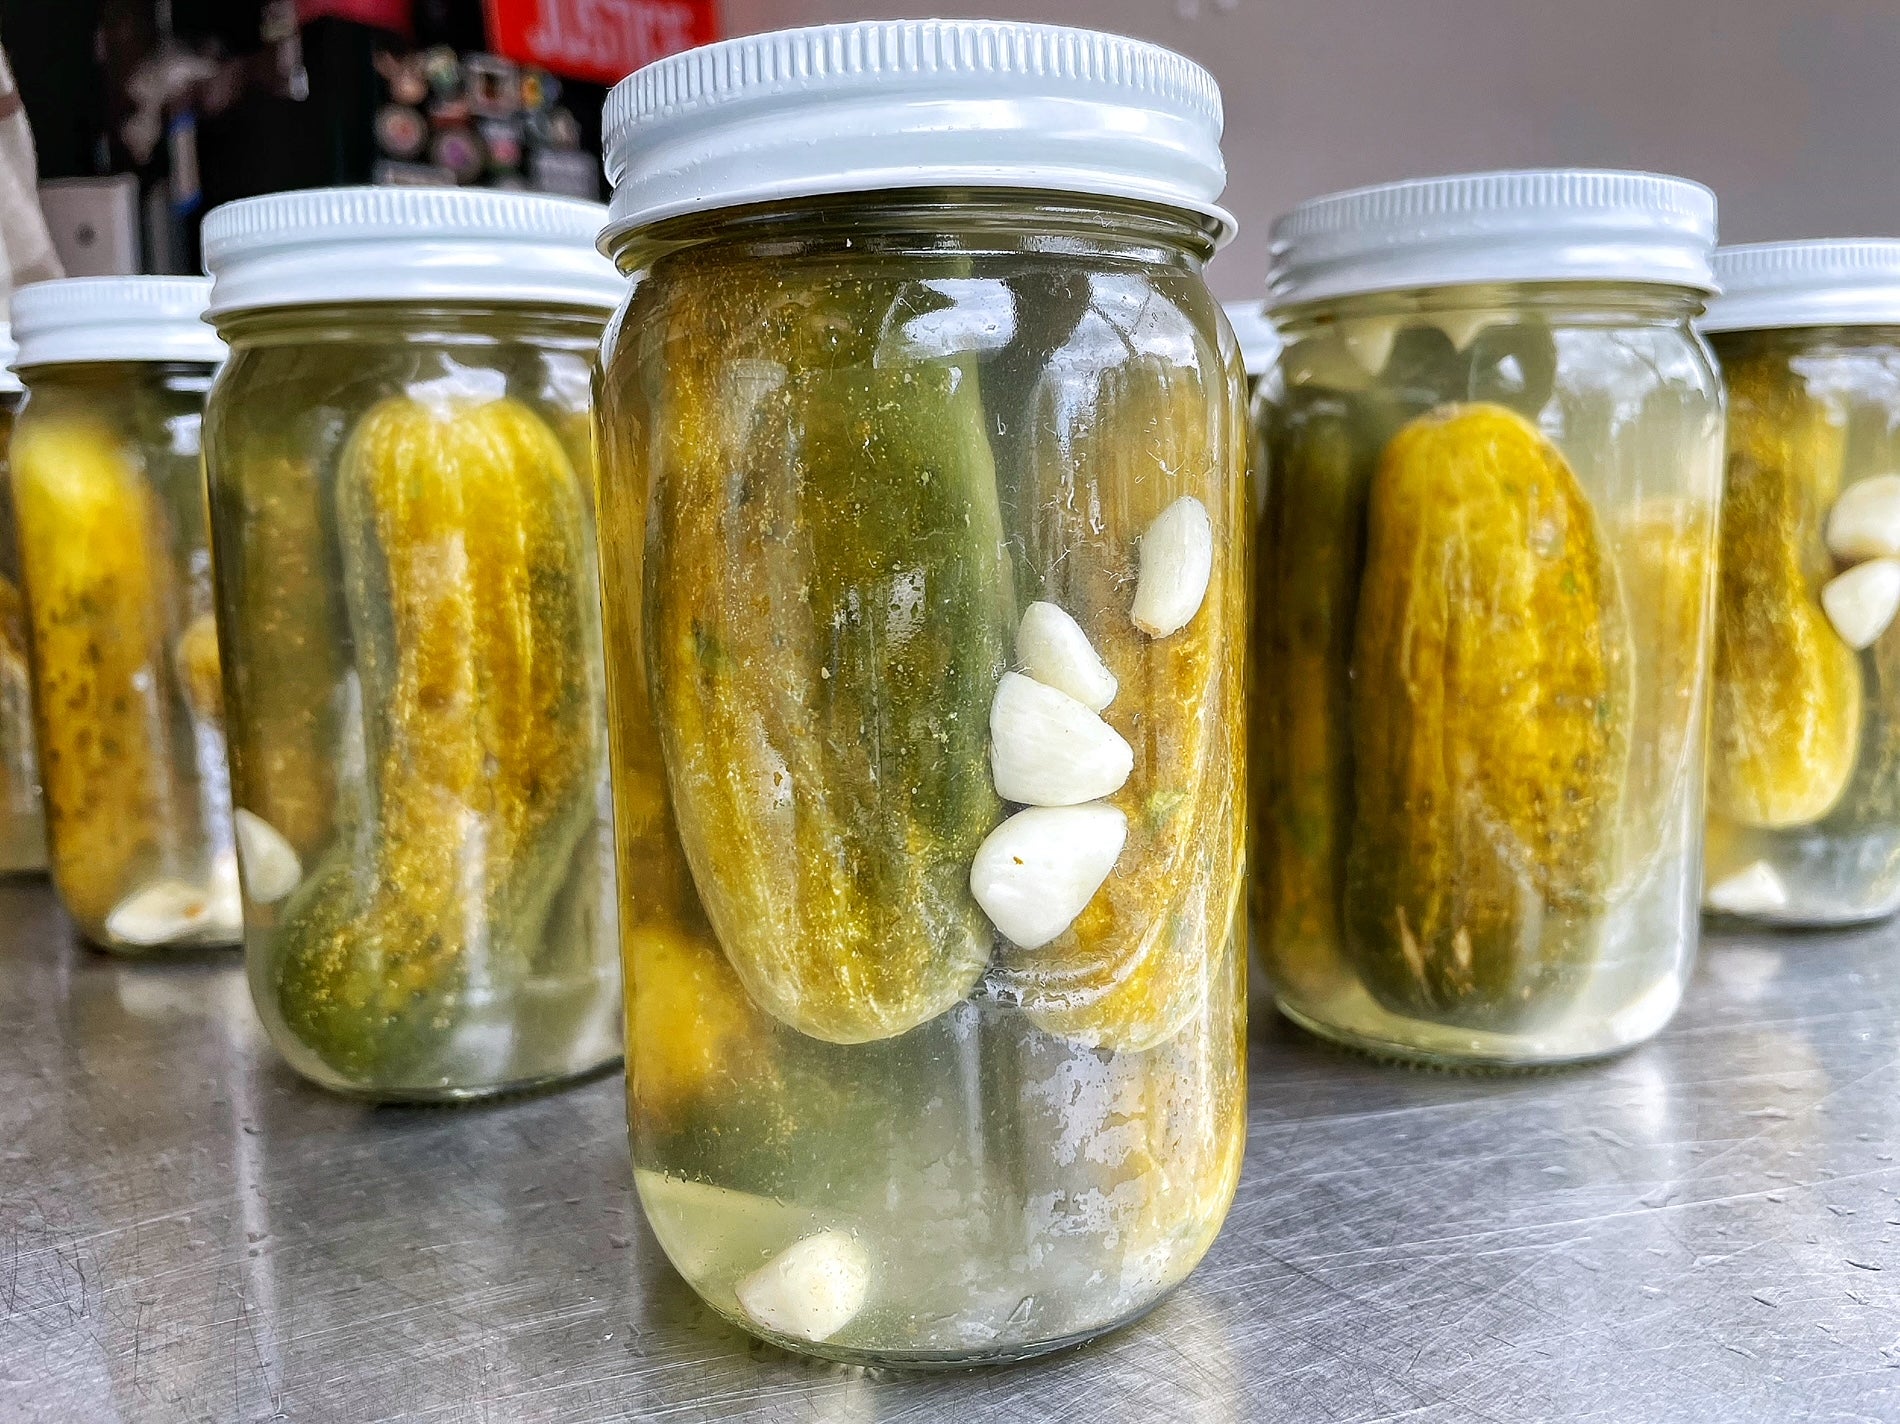 positive pickle!! : r/Pickles